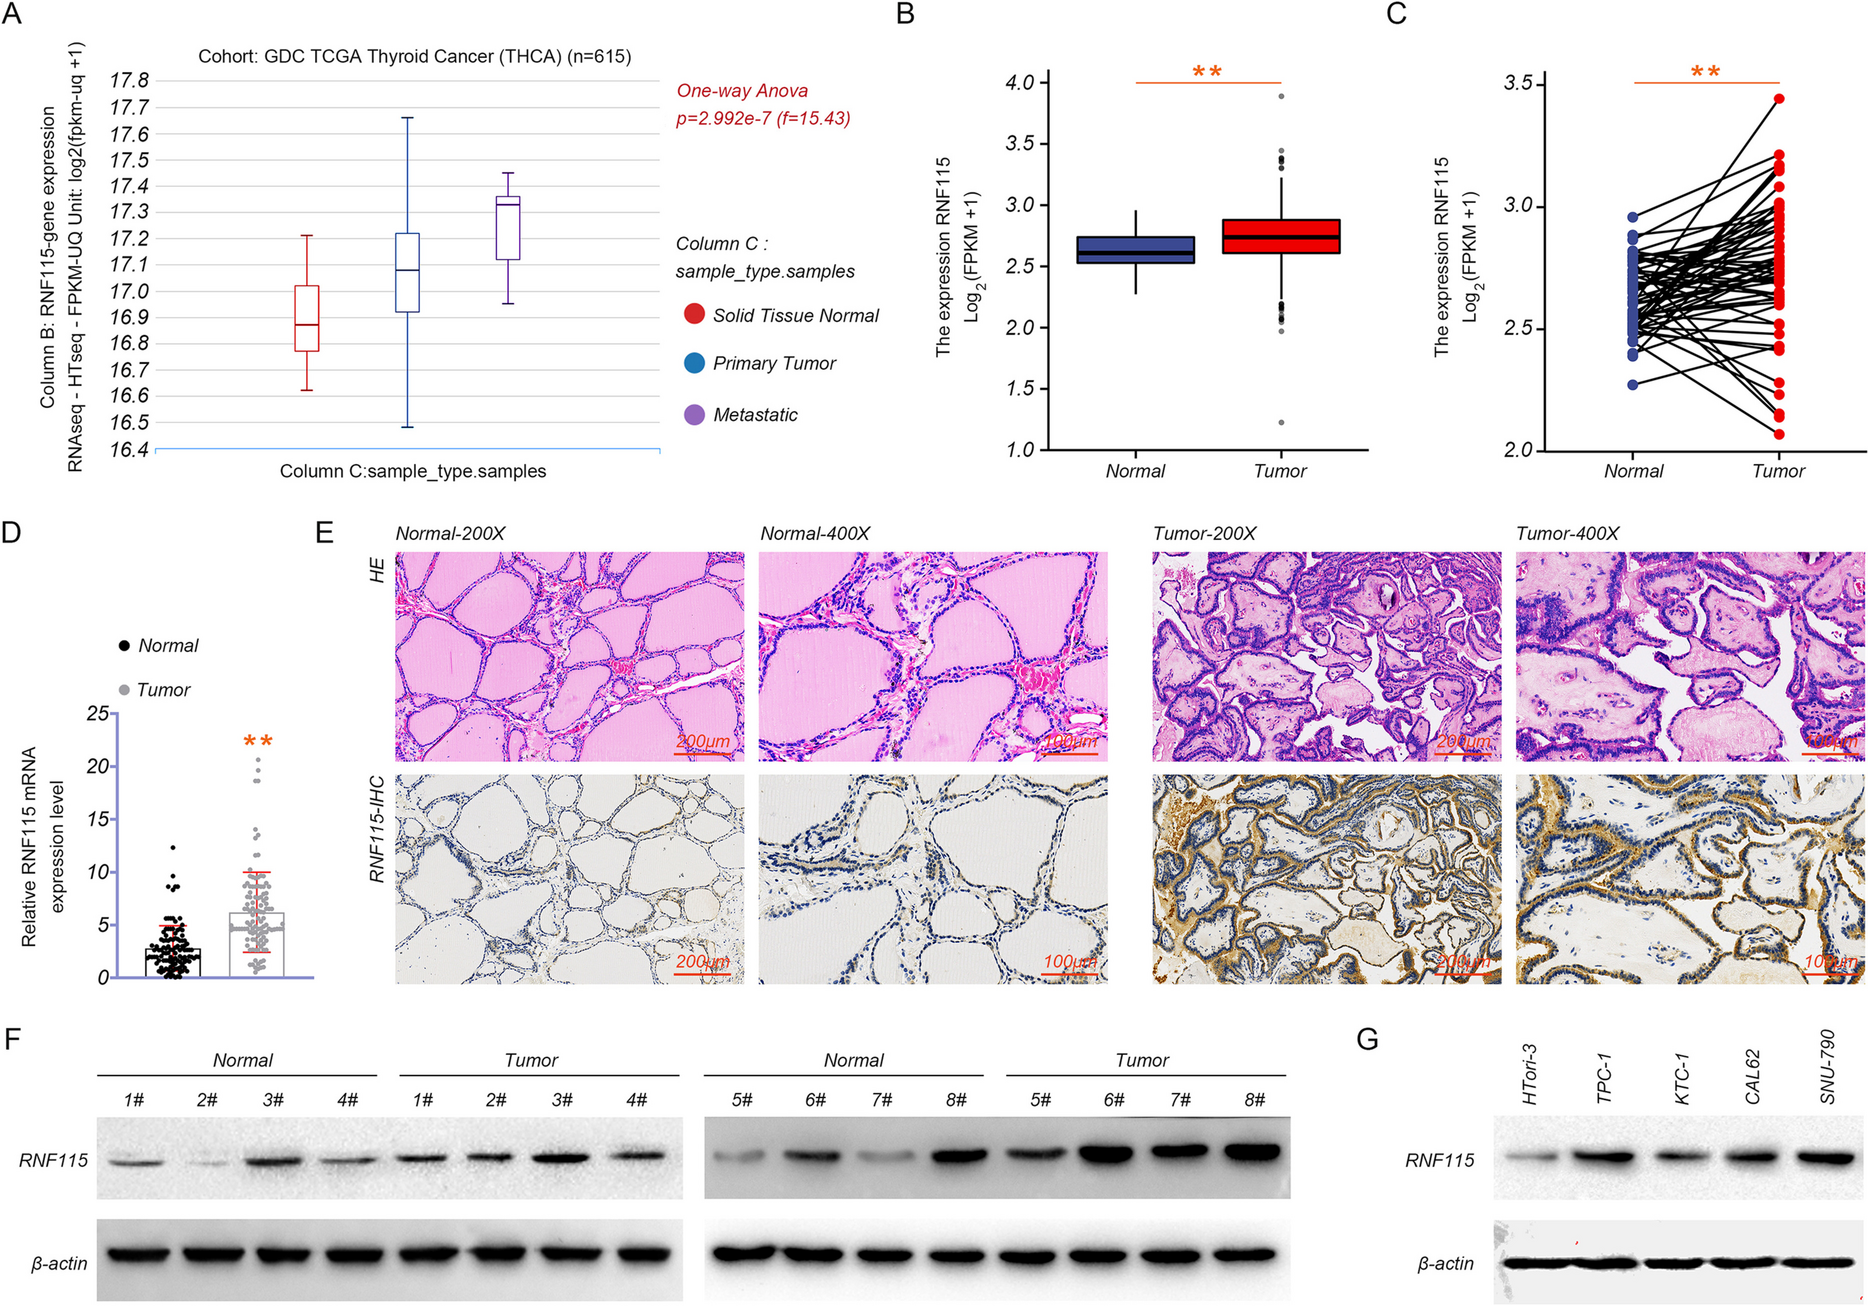 RNF115 aggravates tumor progression through regulation of CDK10 degradation in thyroid carcinoma